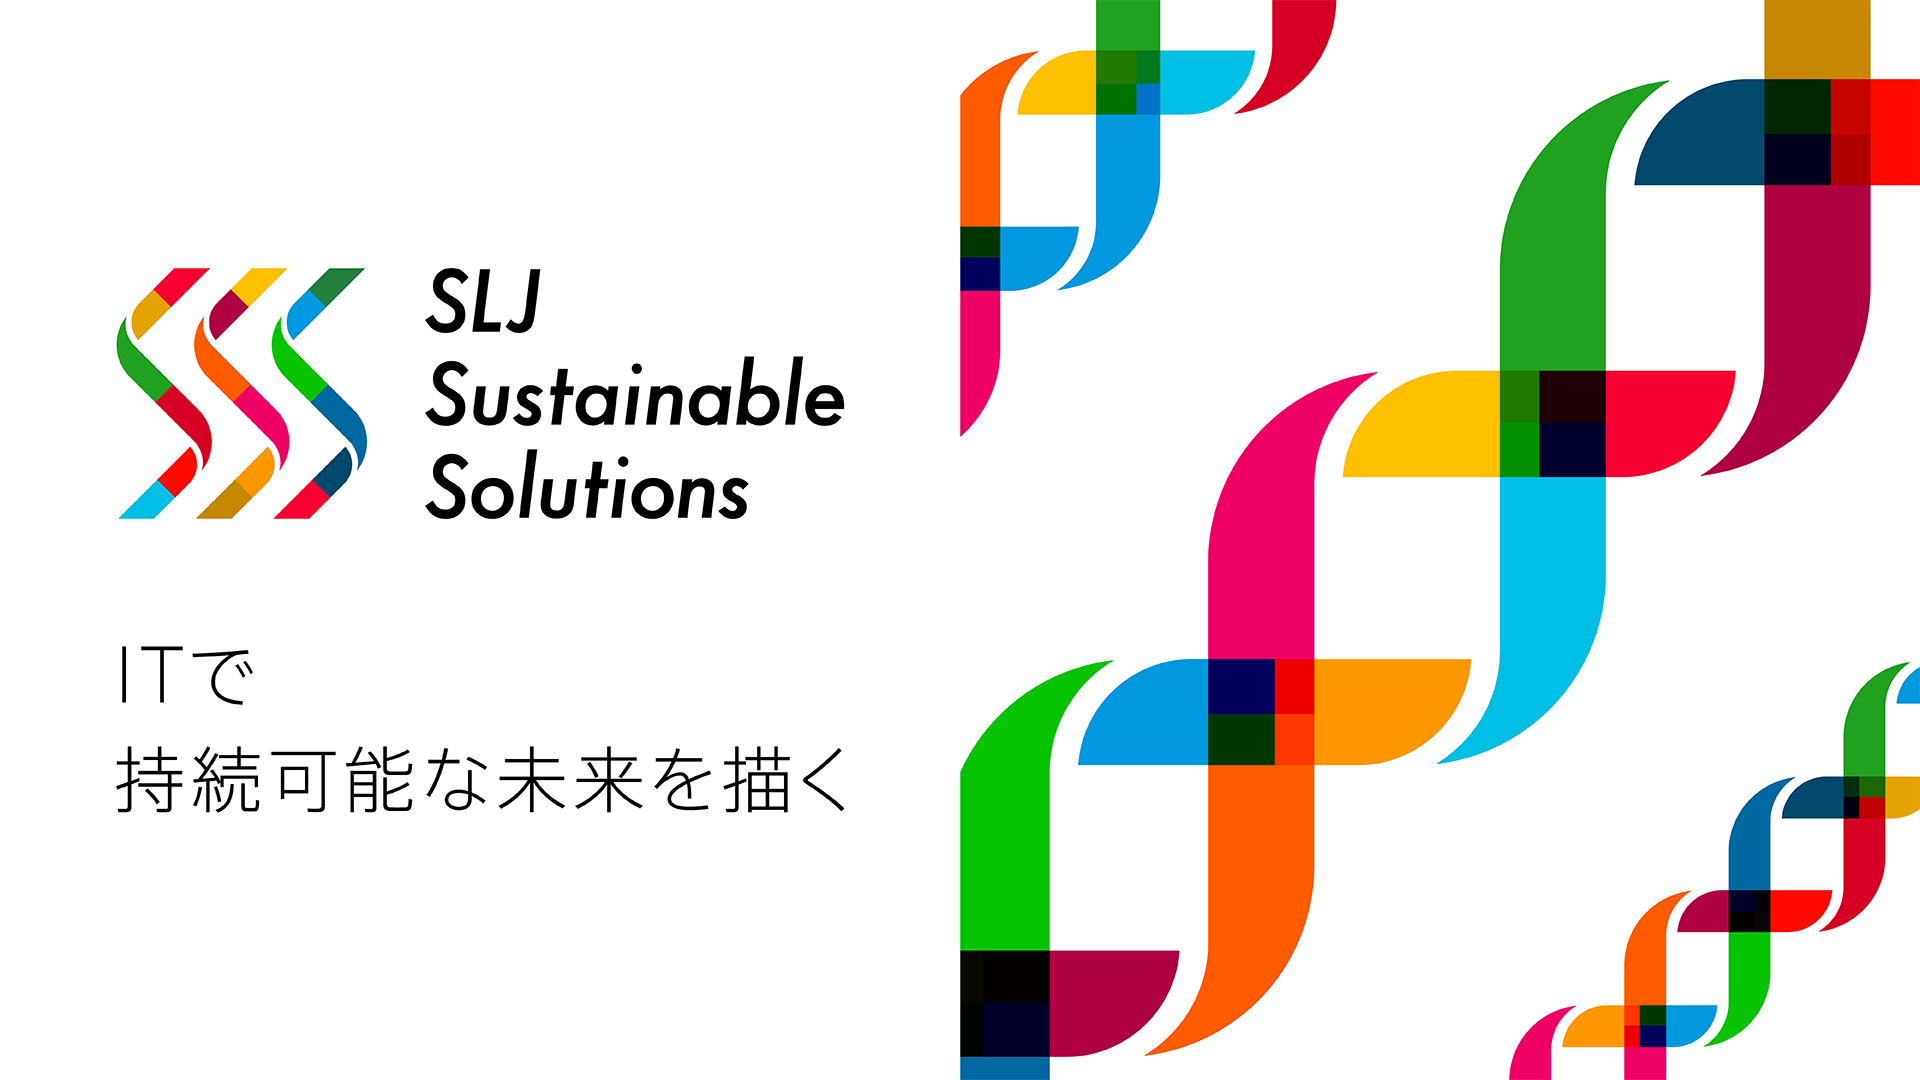 SLJ Sustainable Solutions ITで持続可能な未来を描く